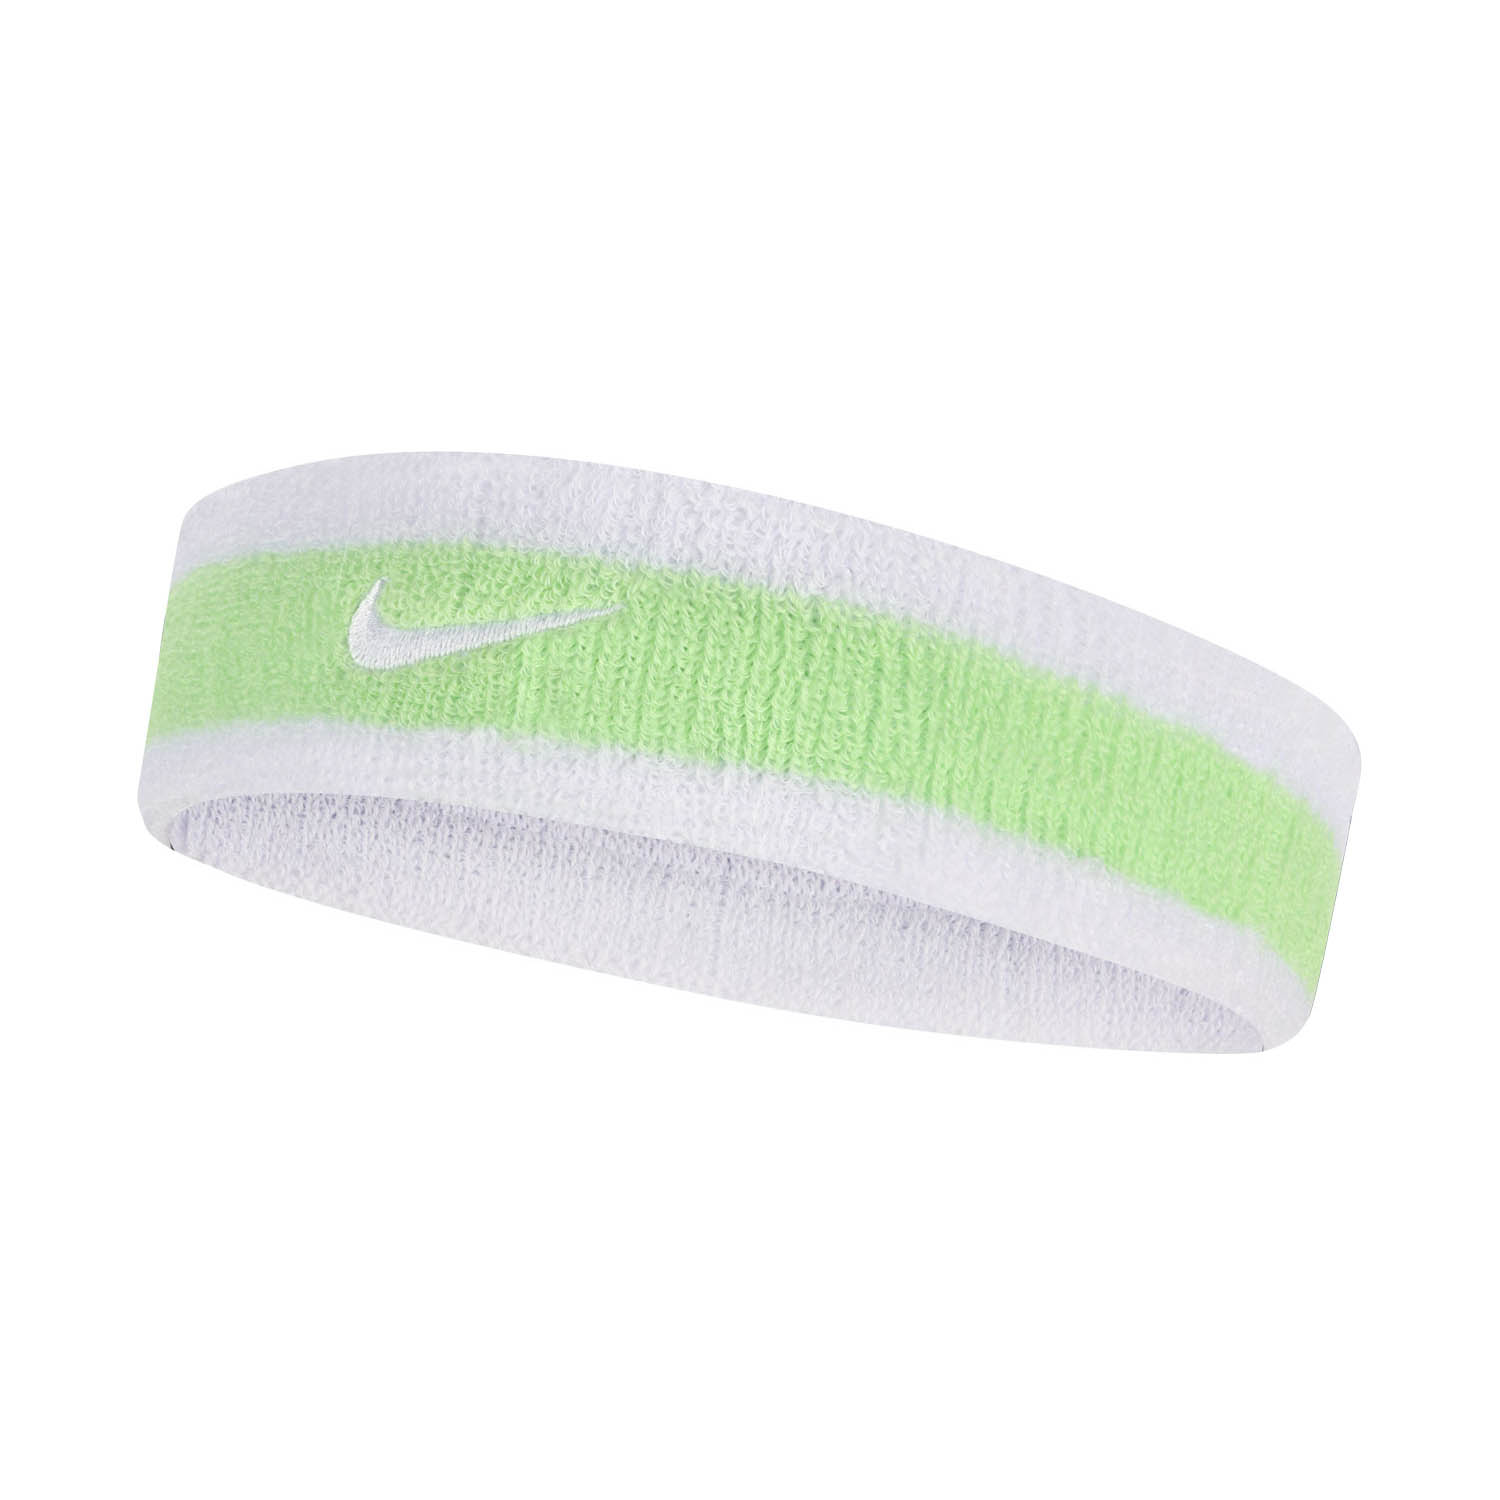 Nike Swoosh Fascia - White/Vapor Green